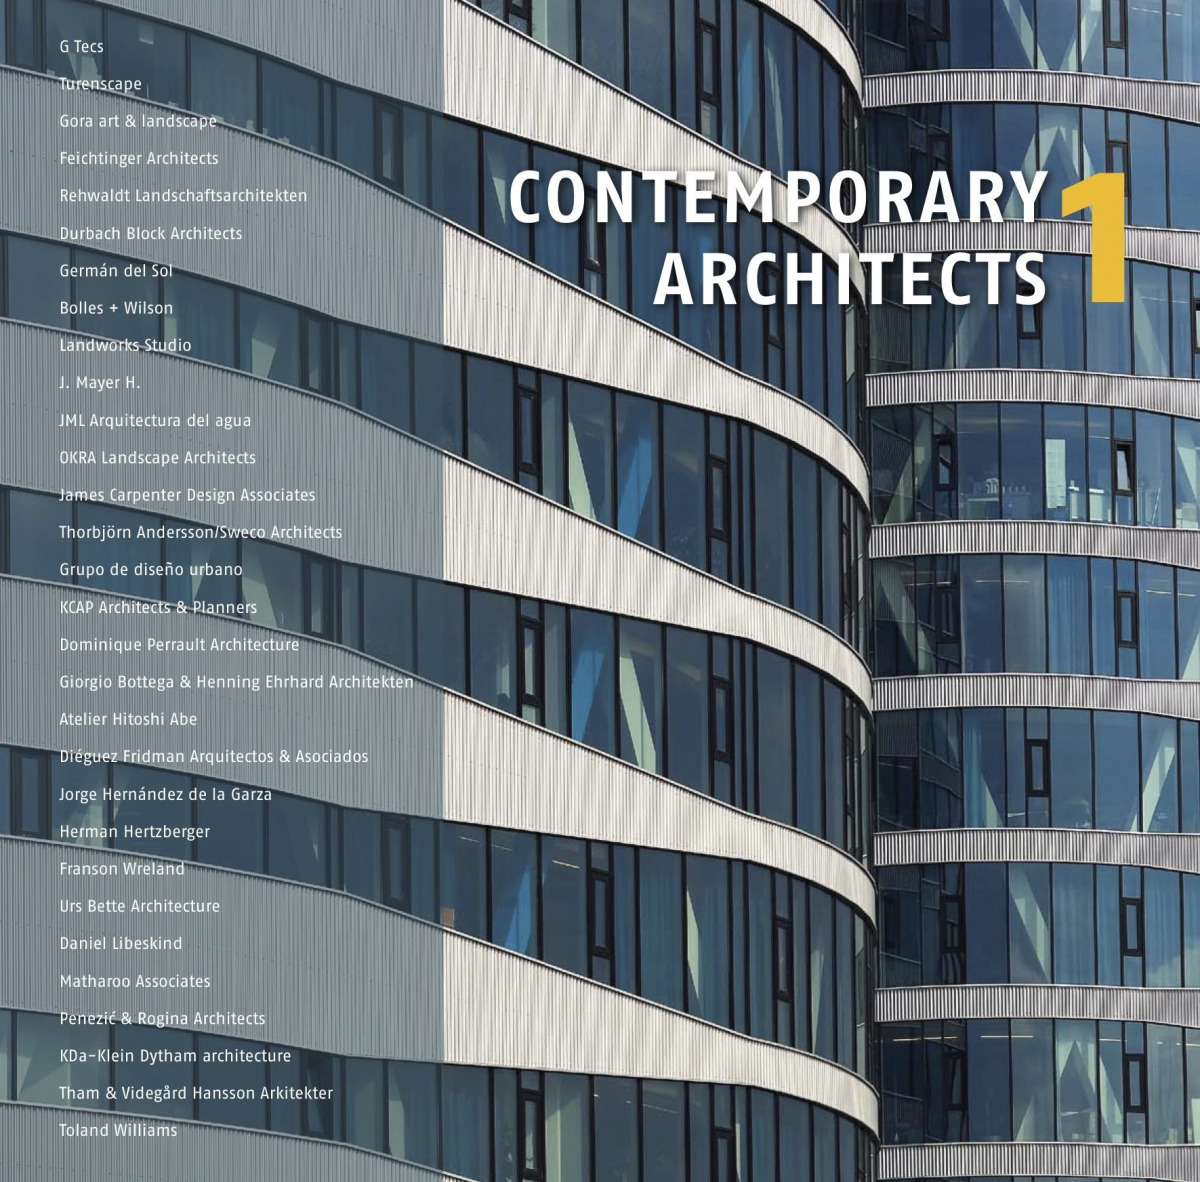 Contemporary architects 1 - Vv.Aa.